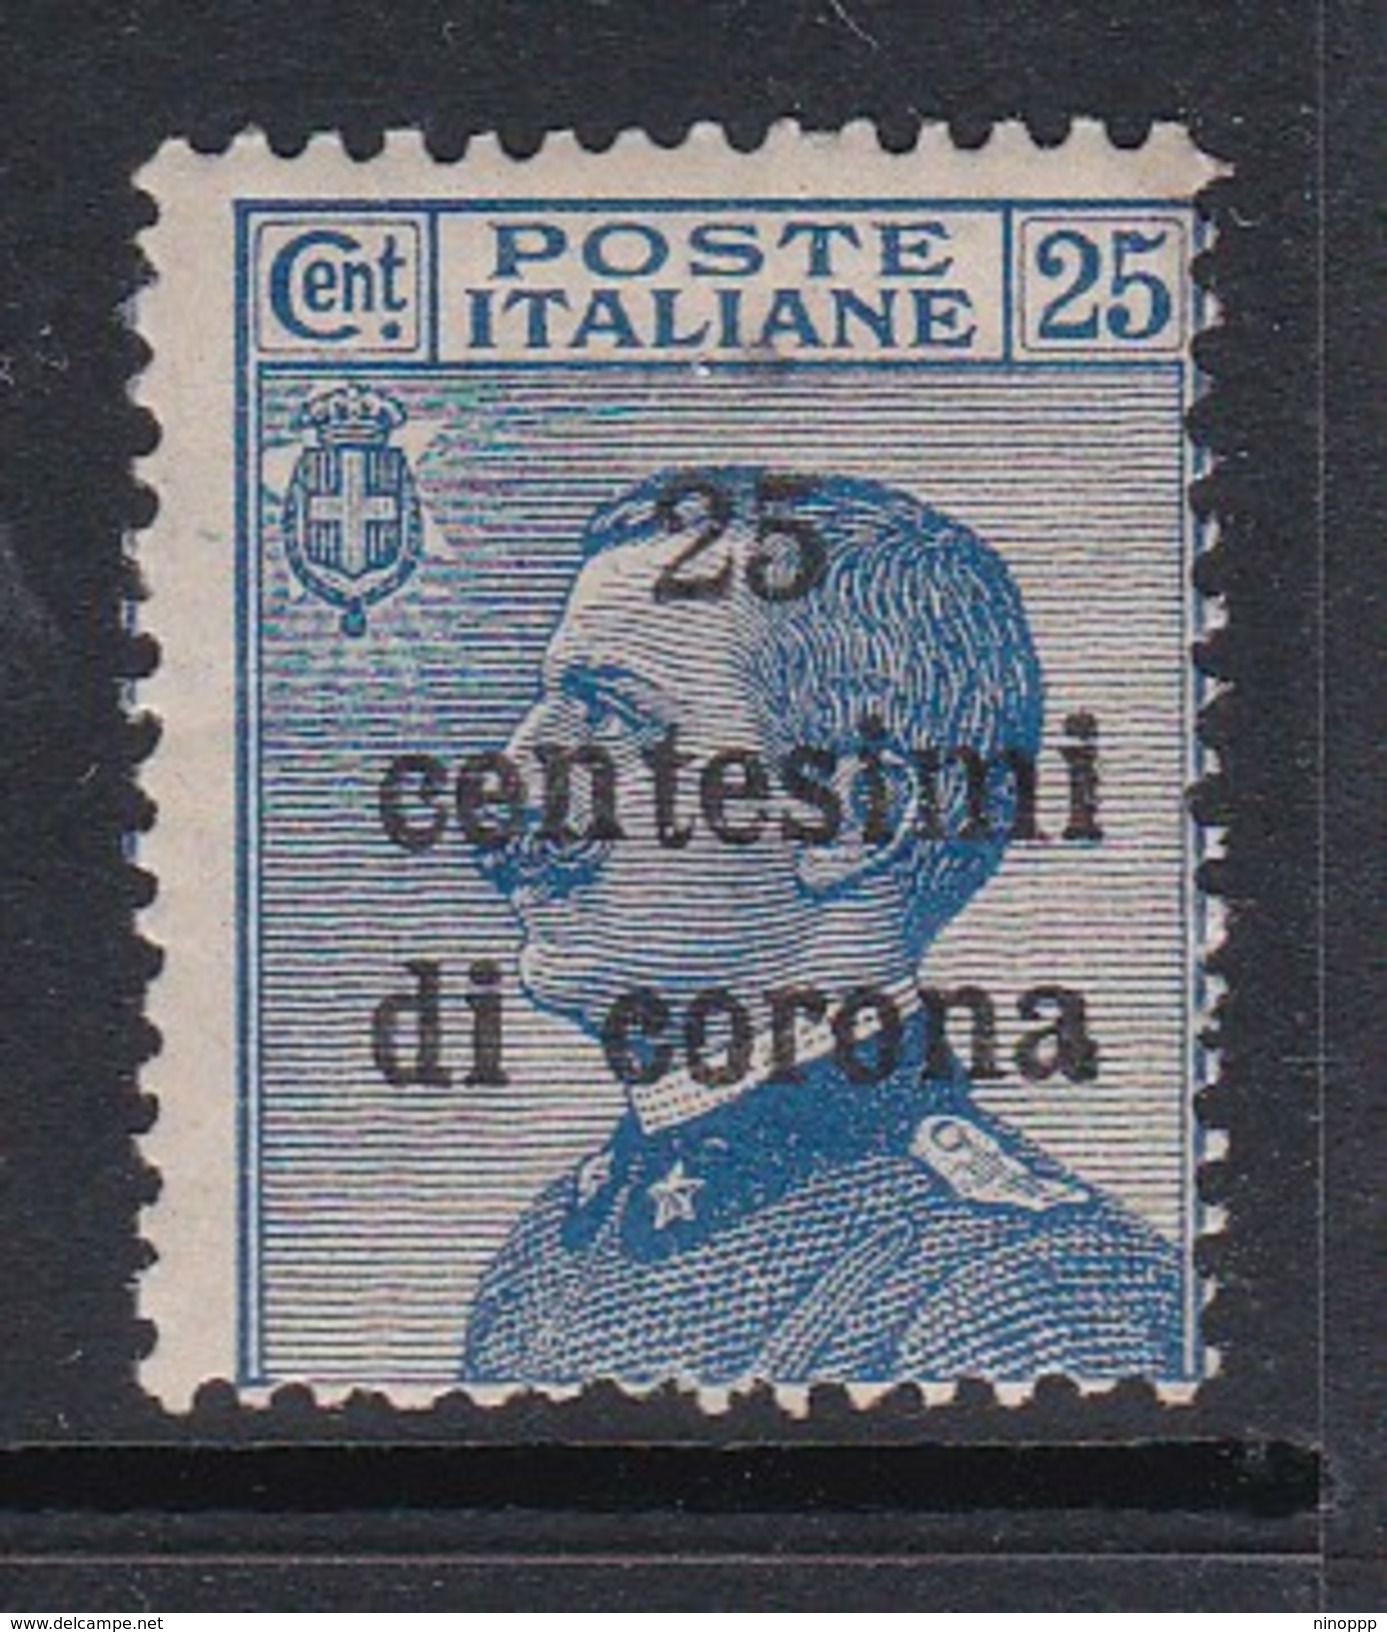 Venezia Giulia N69 1919 Italian Stamps Overprinted 25c On 25c Blue  Mint Hinged - Austrian Occupation